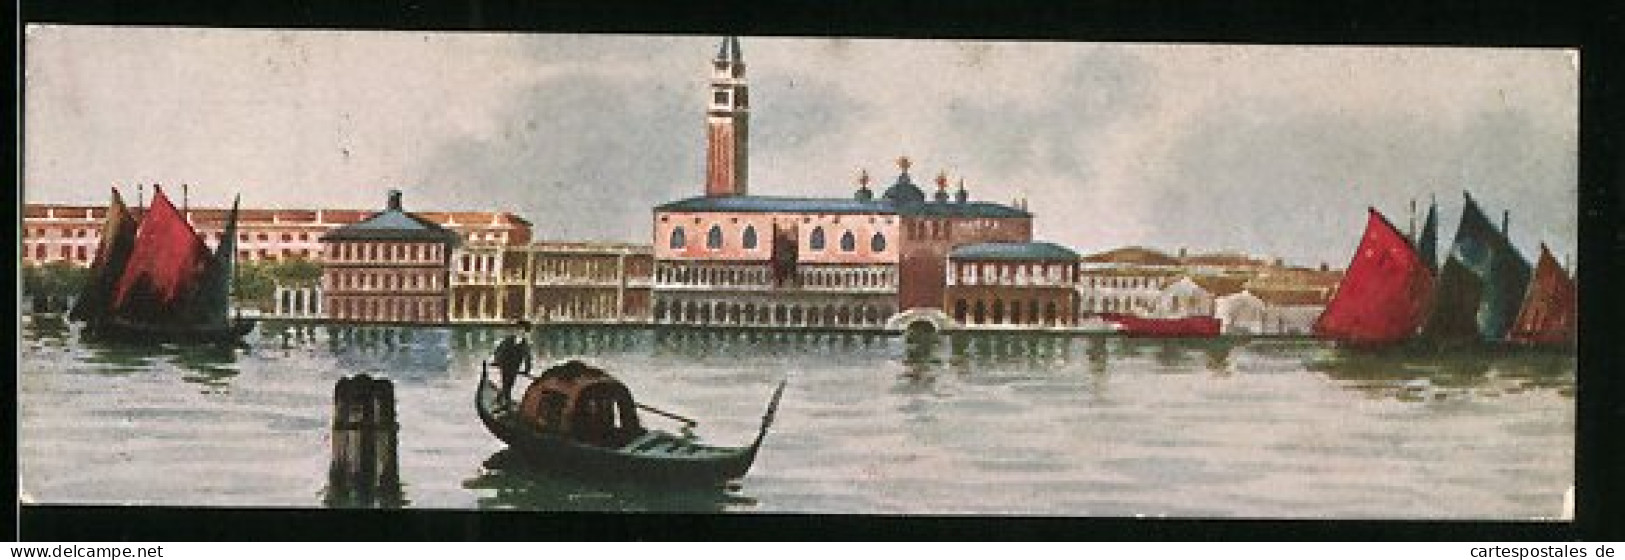 Mini-Cartolina Venezia, Panorama  - Venezia (Venice)